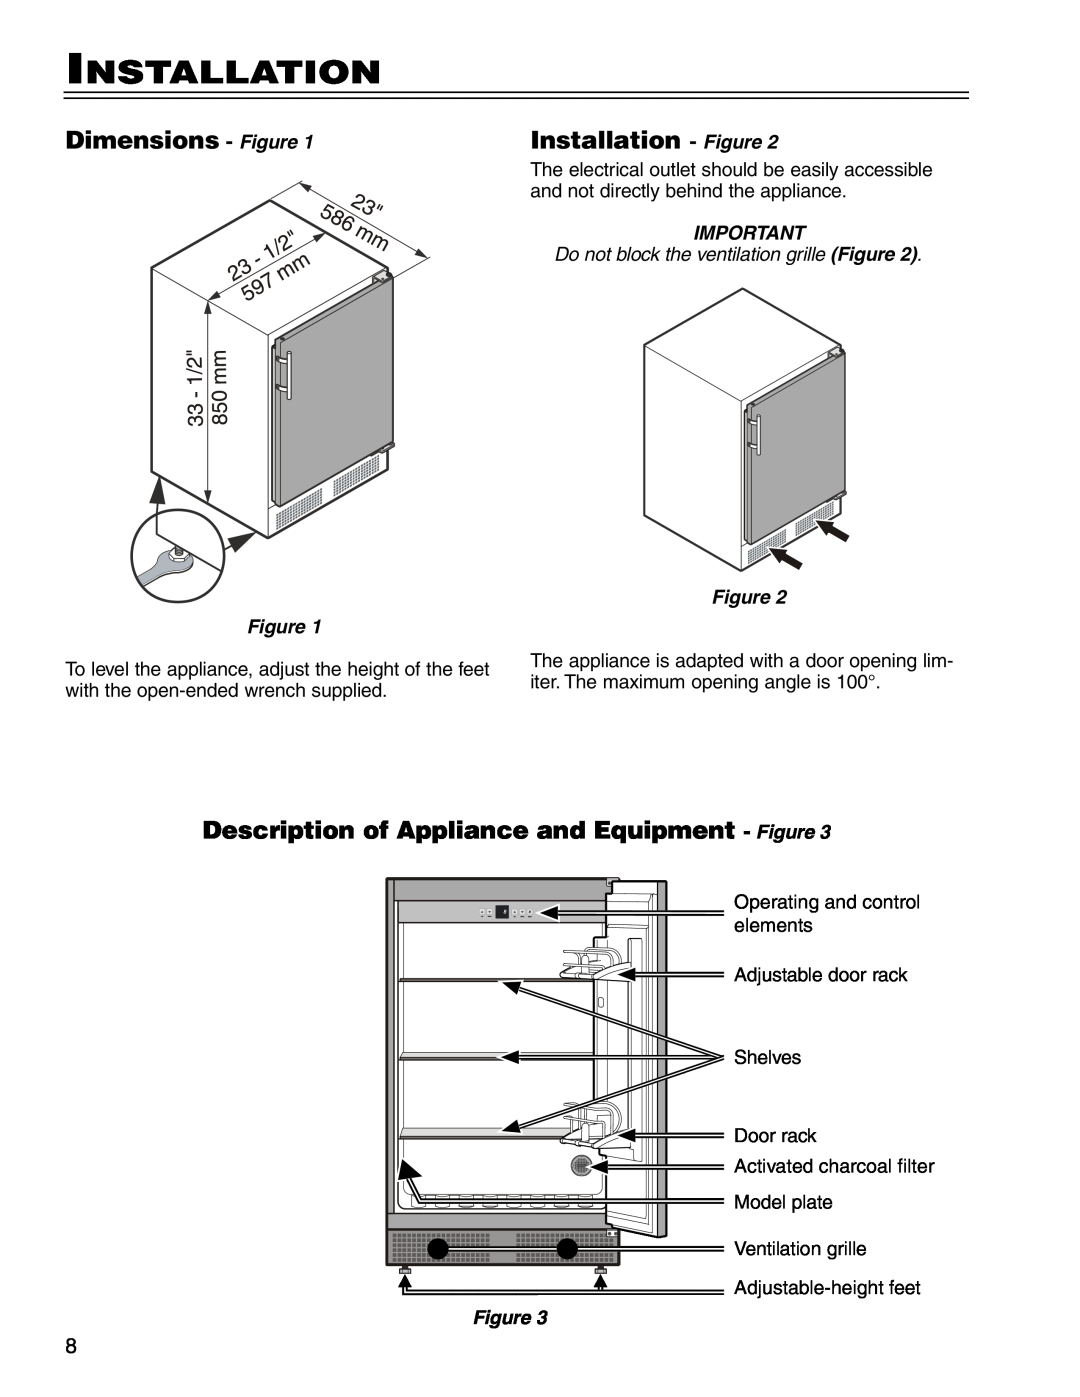 Liebherr RO500 manual Dimensions - Figure, Installation - Figure, Description of Appliance and Equipment - Figure 